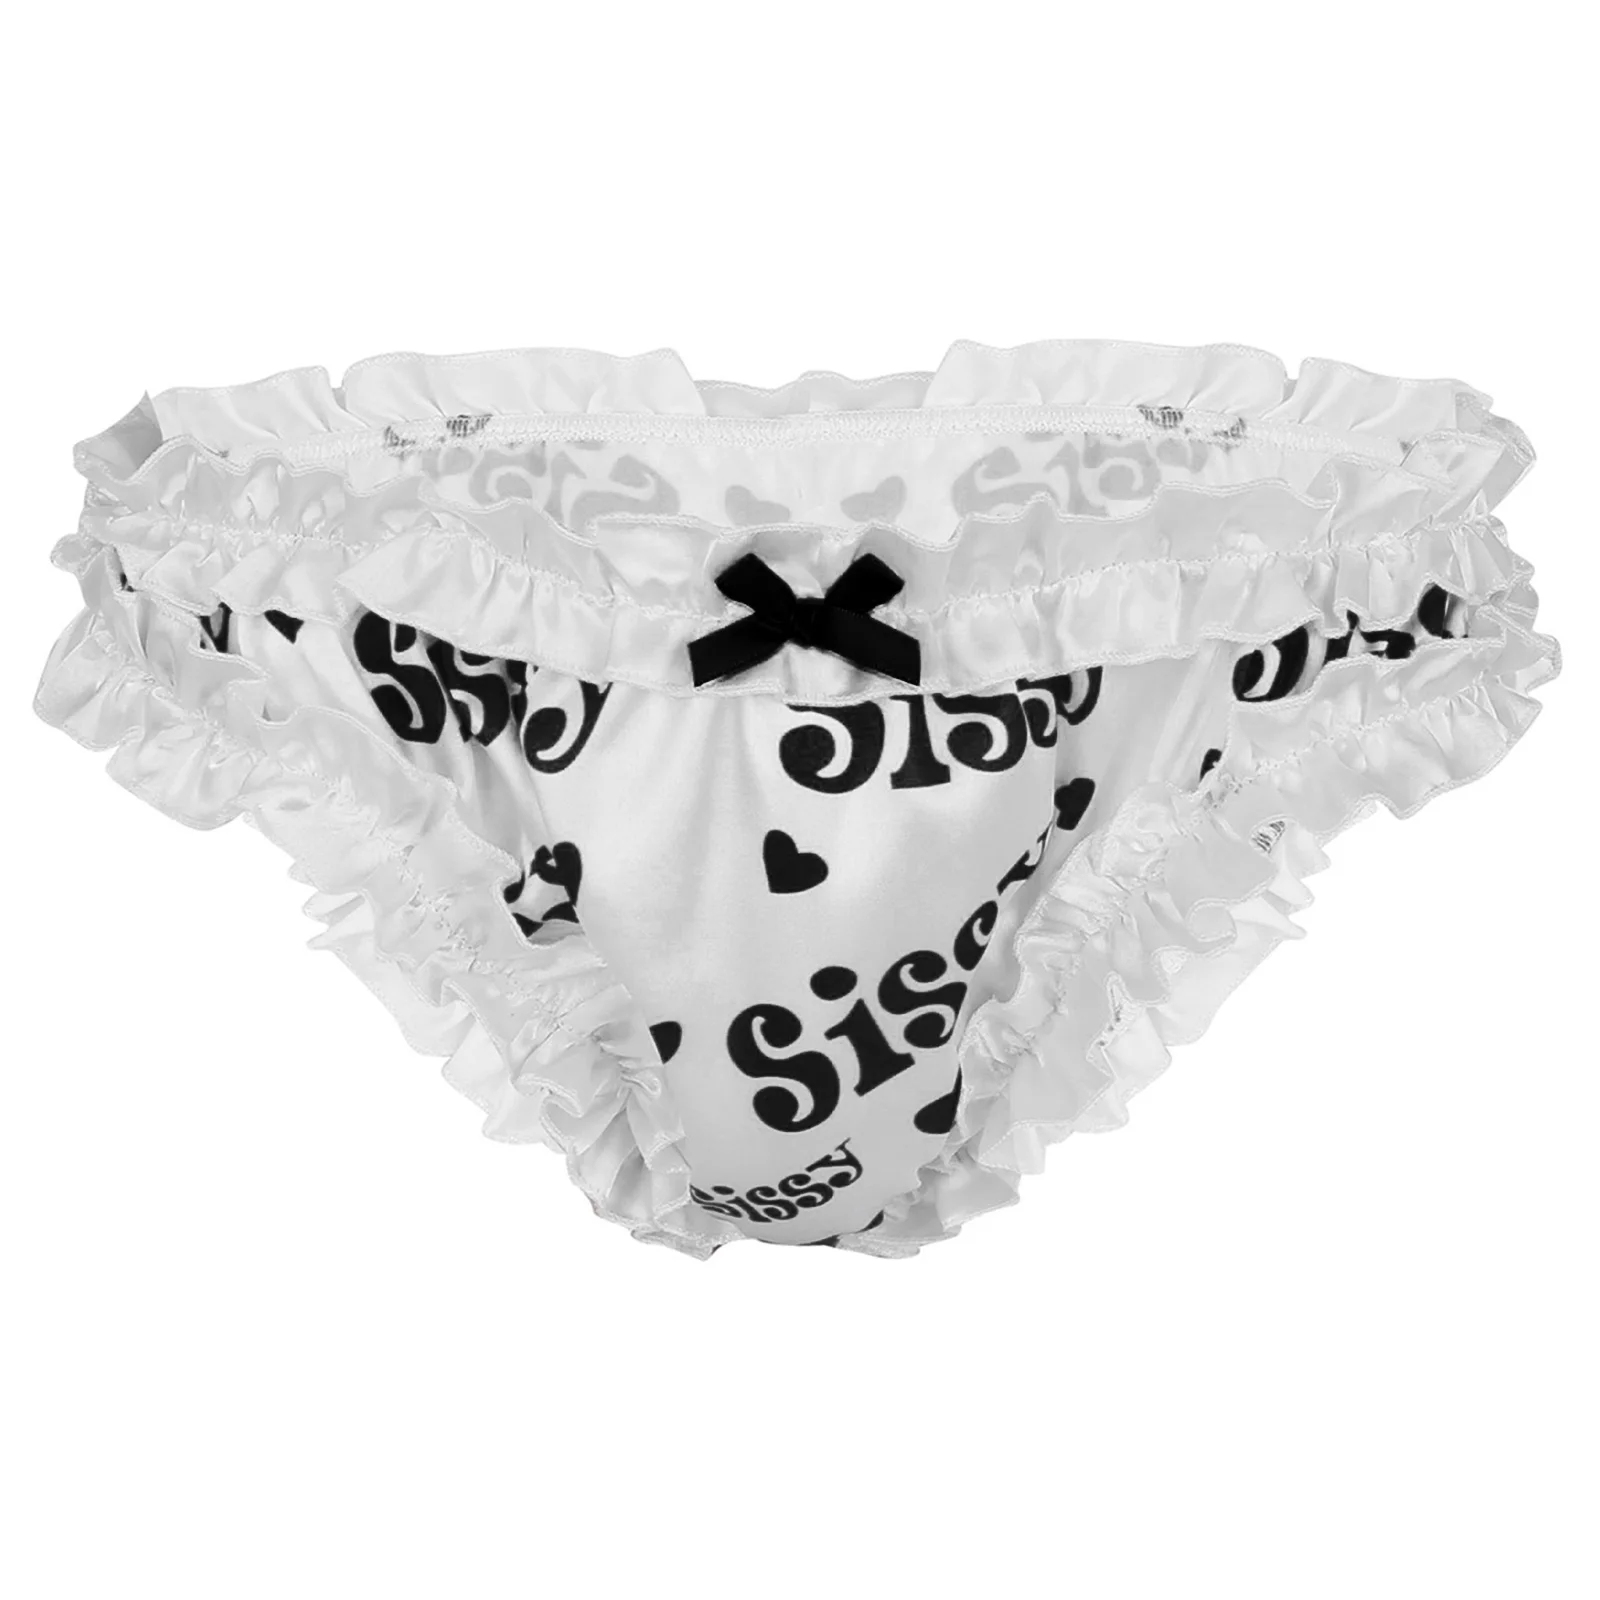 

Mens Sissy Lingerie Panties Super Ruffled Frilly Ruffled High Cut Underpants Erotic Hot Sissy Knickers Bloomers Briefs Underwear